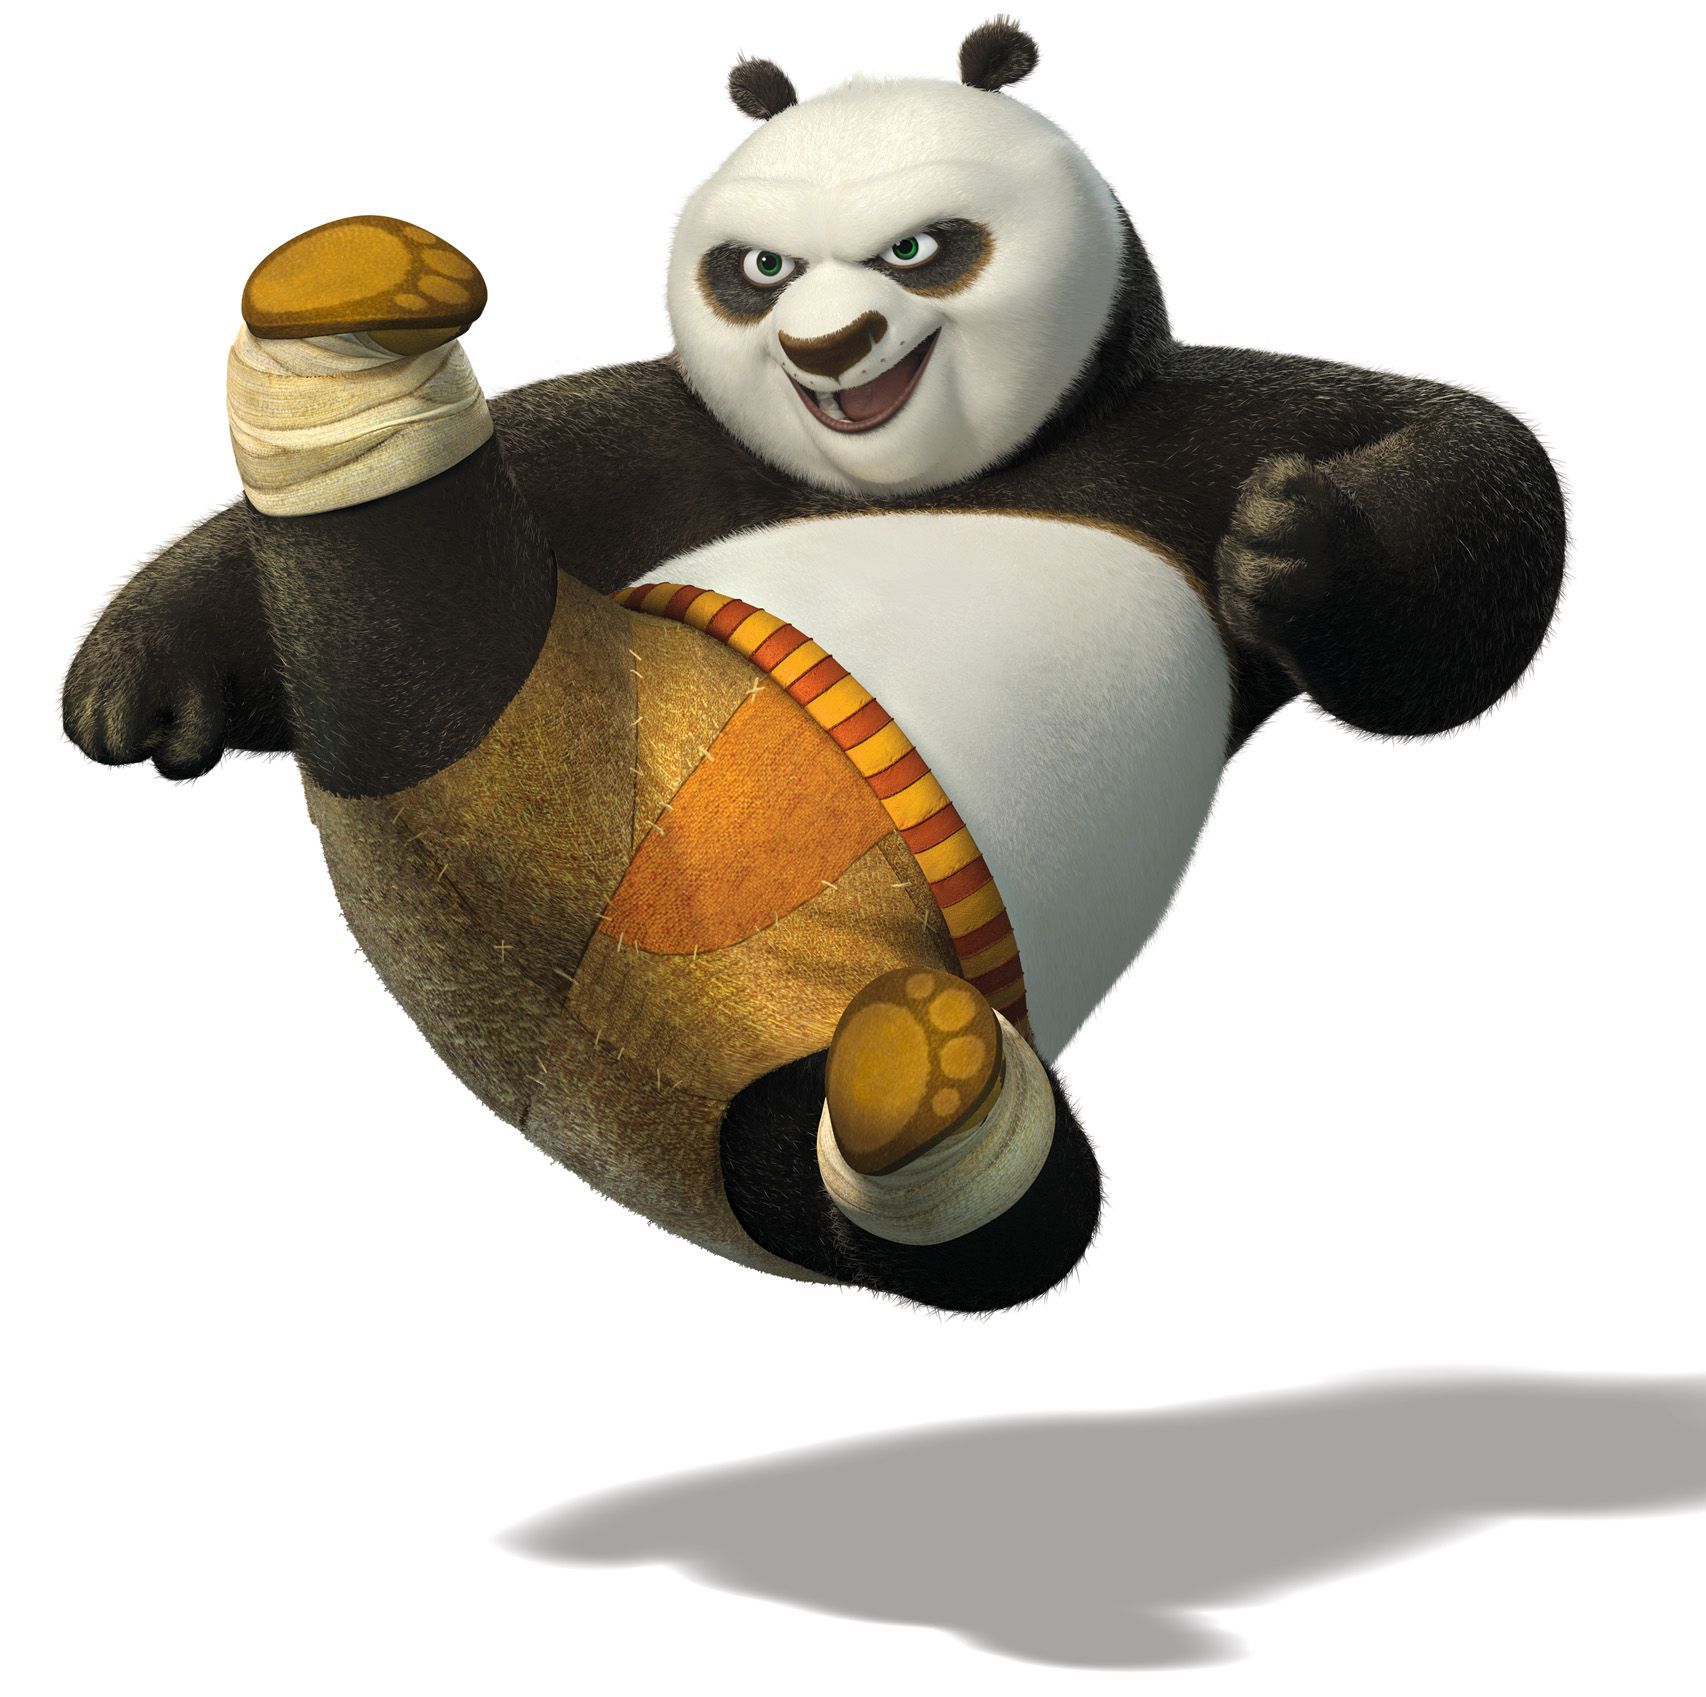 po kung fu panda kick